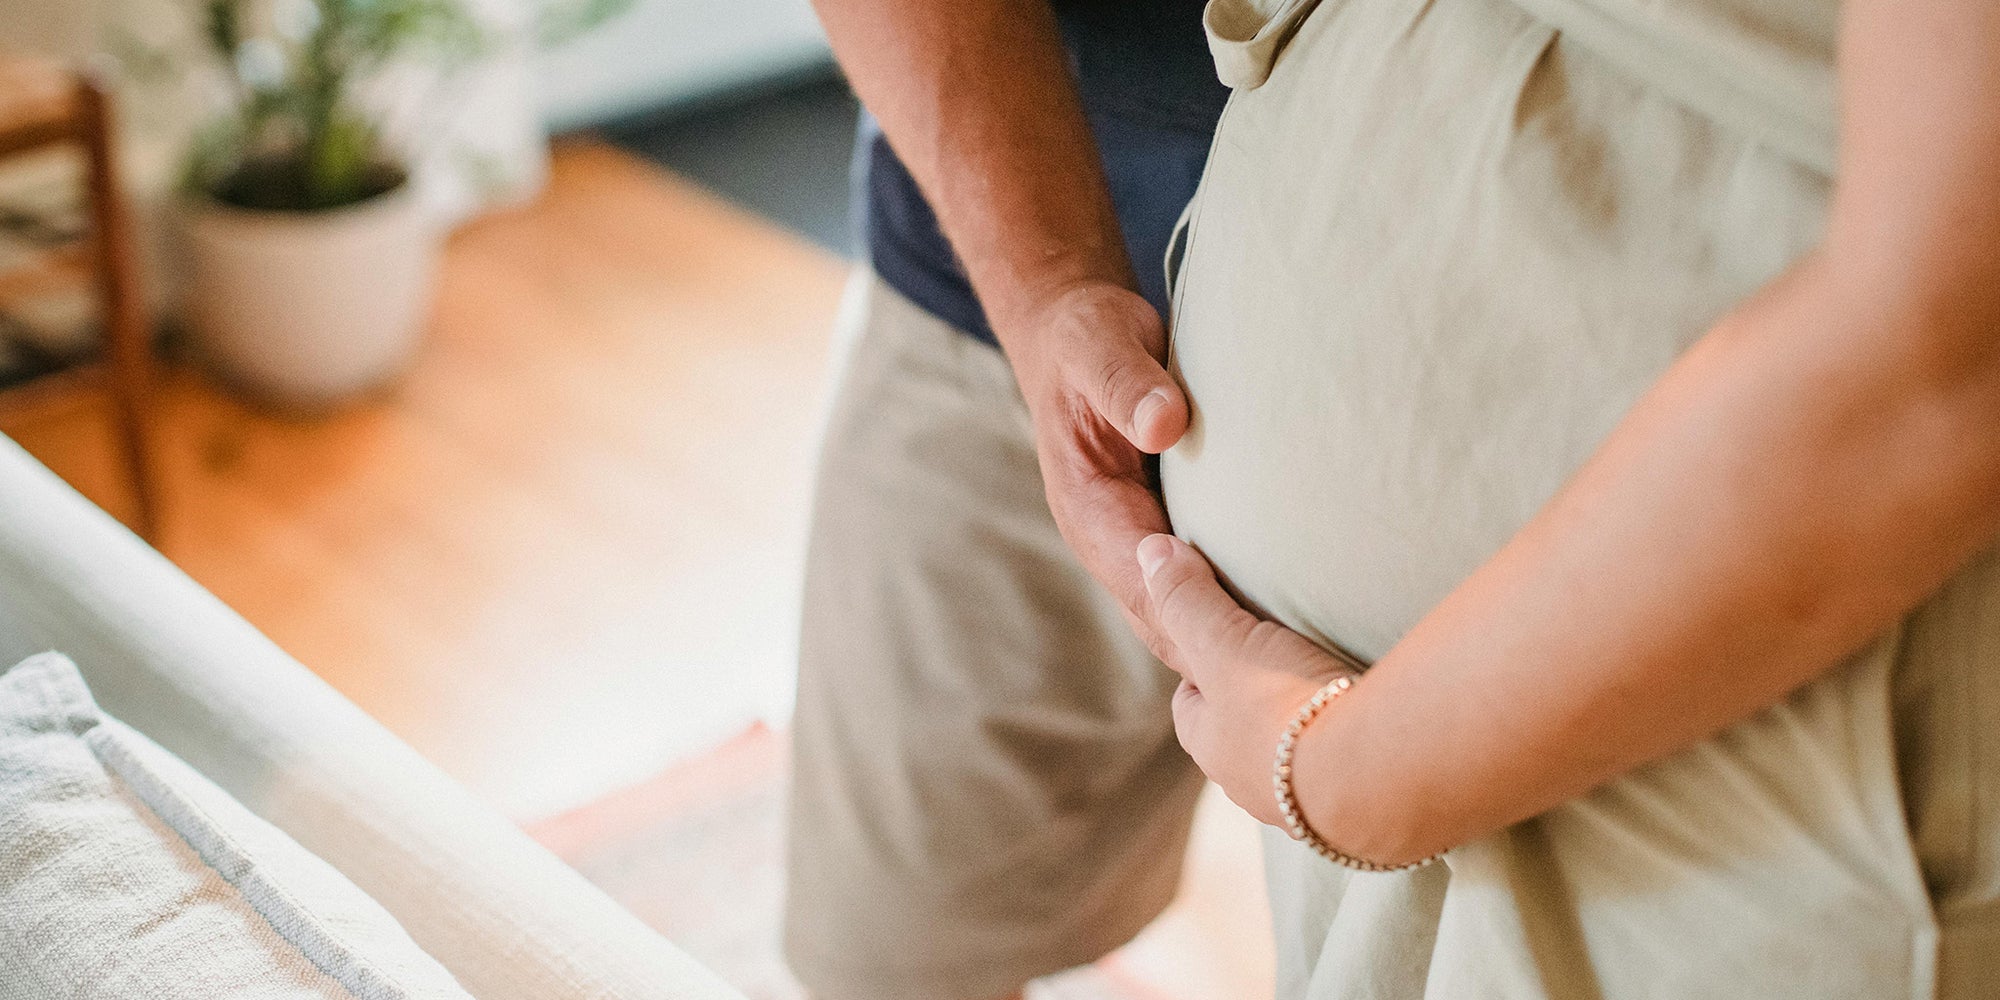 6 Tips for Navigating Pregnancy Loss from Dr. Sunita Osborn